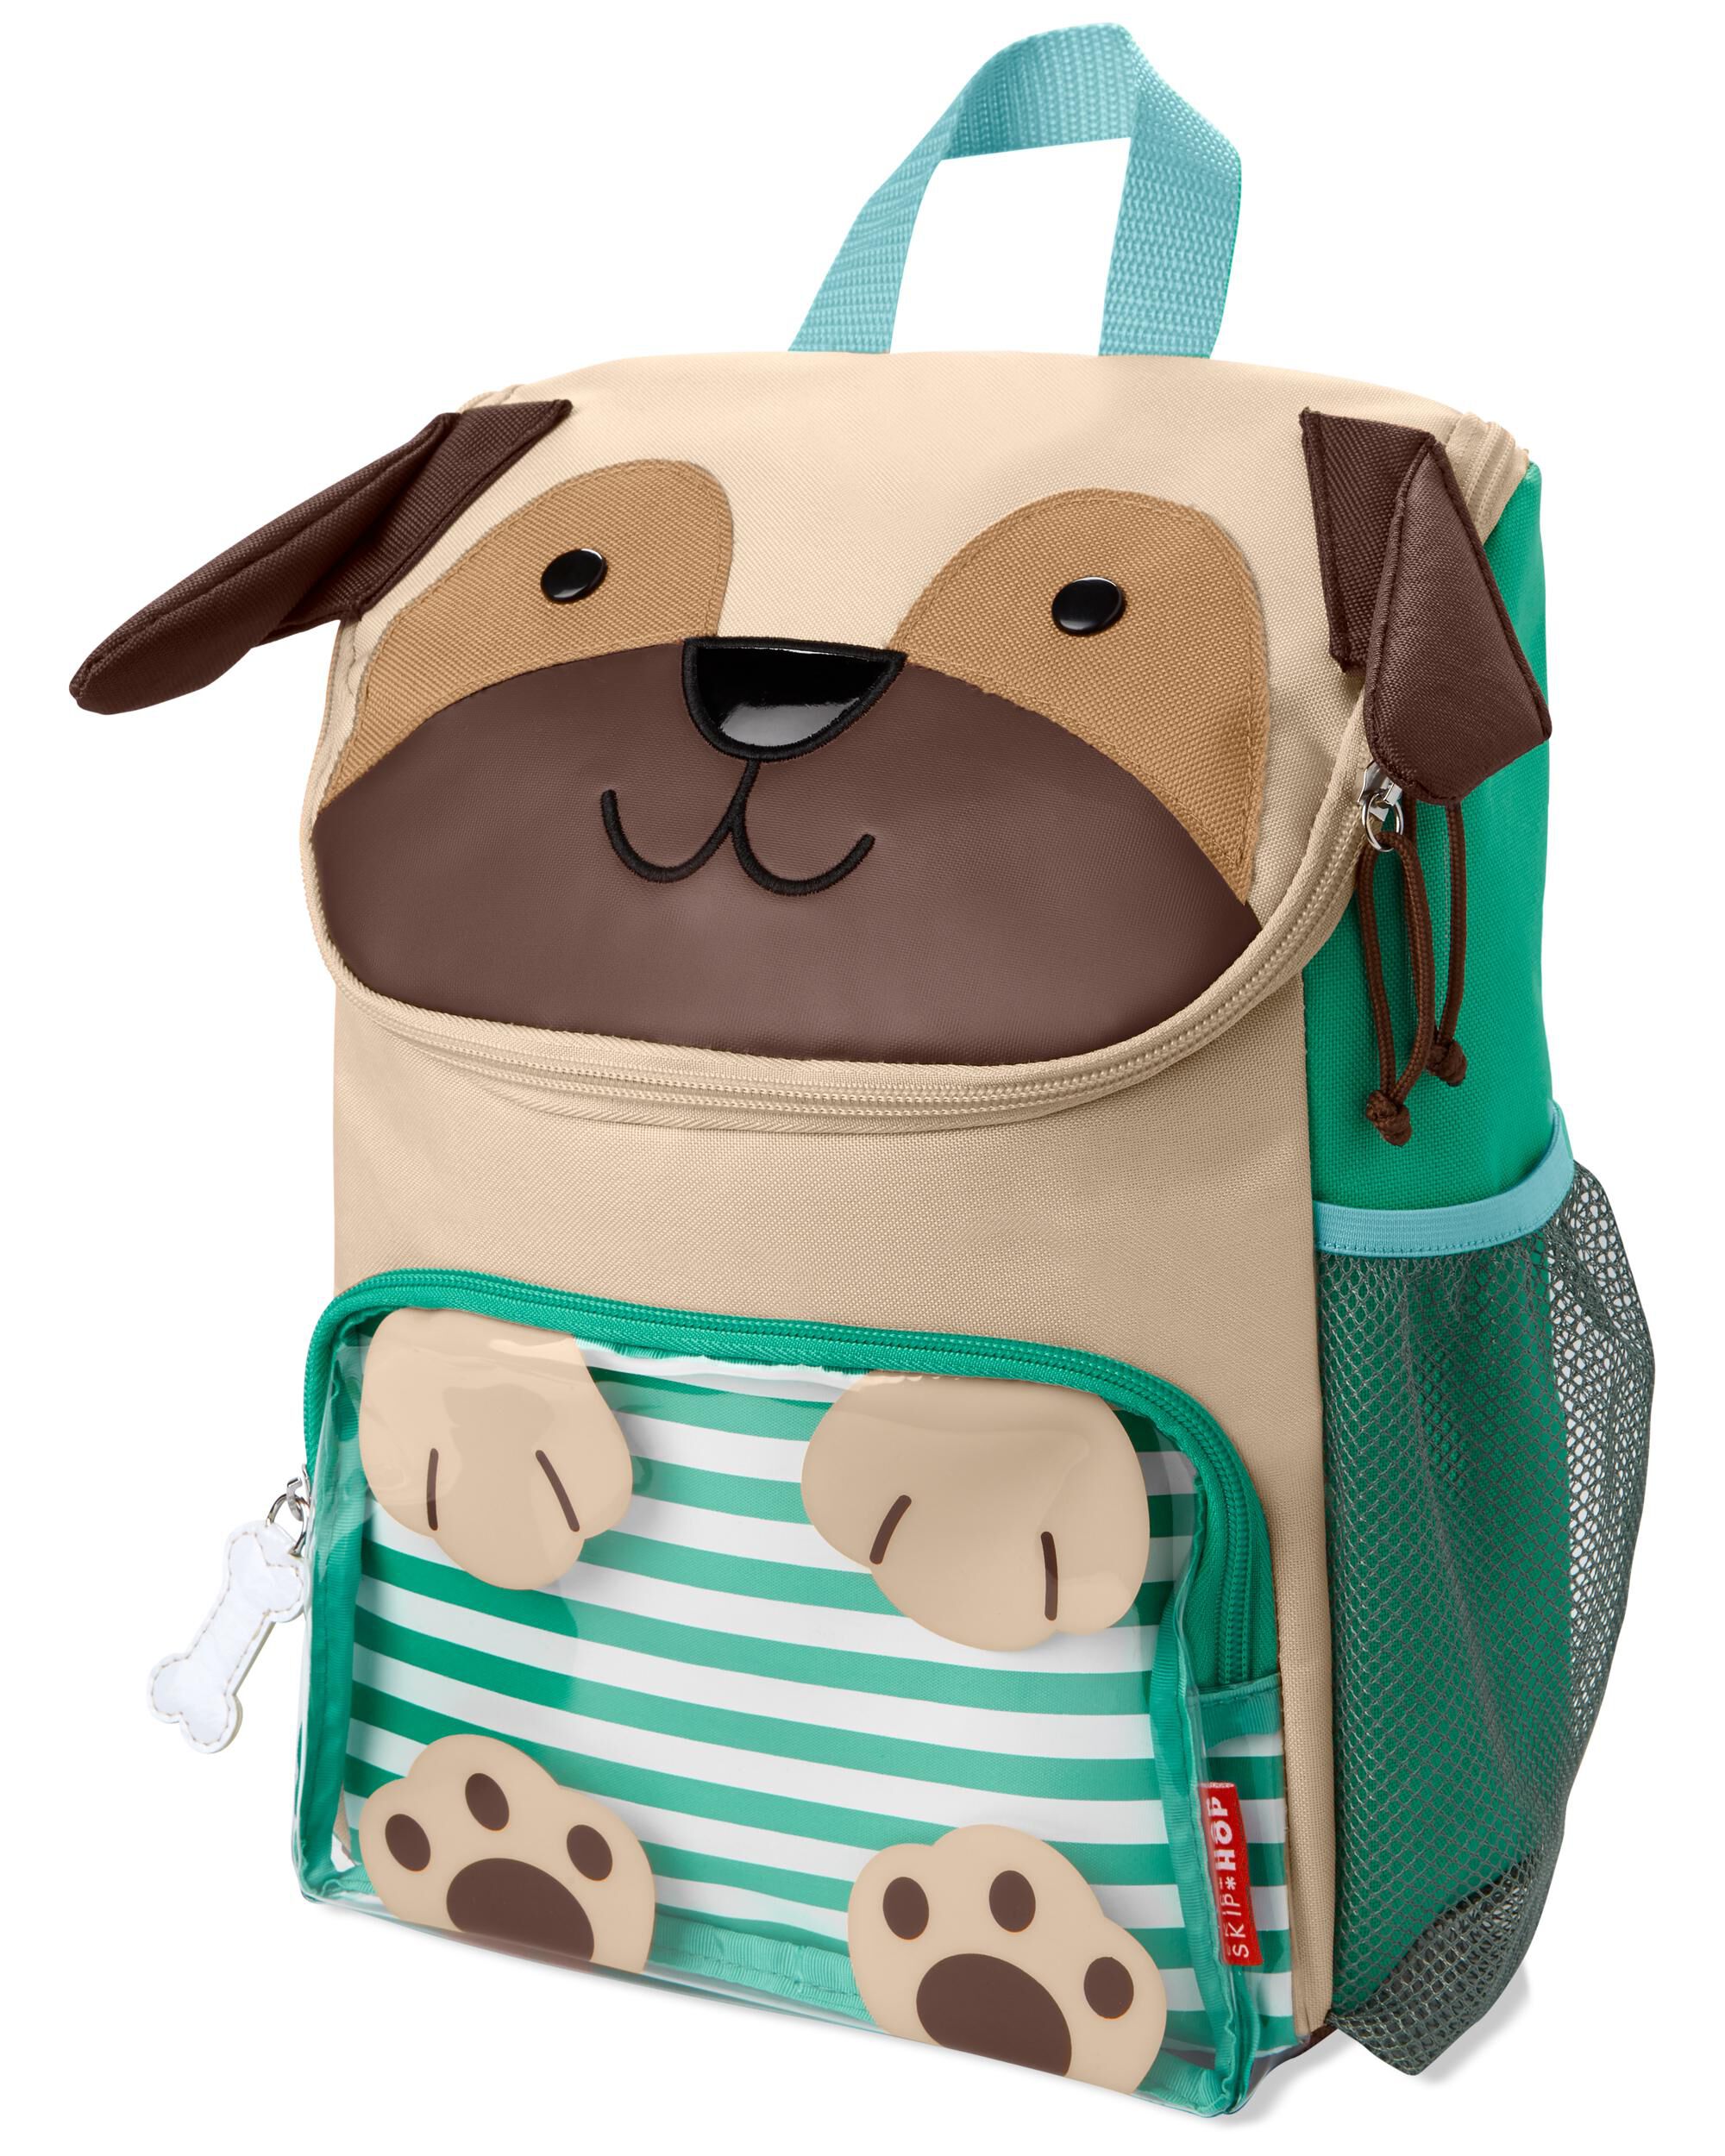 Carters Zoo Big Kid Backpack - Pug